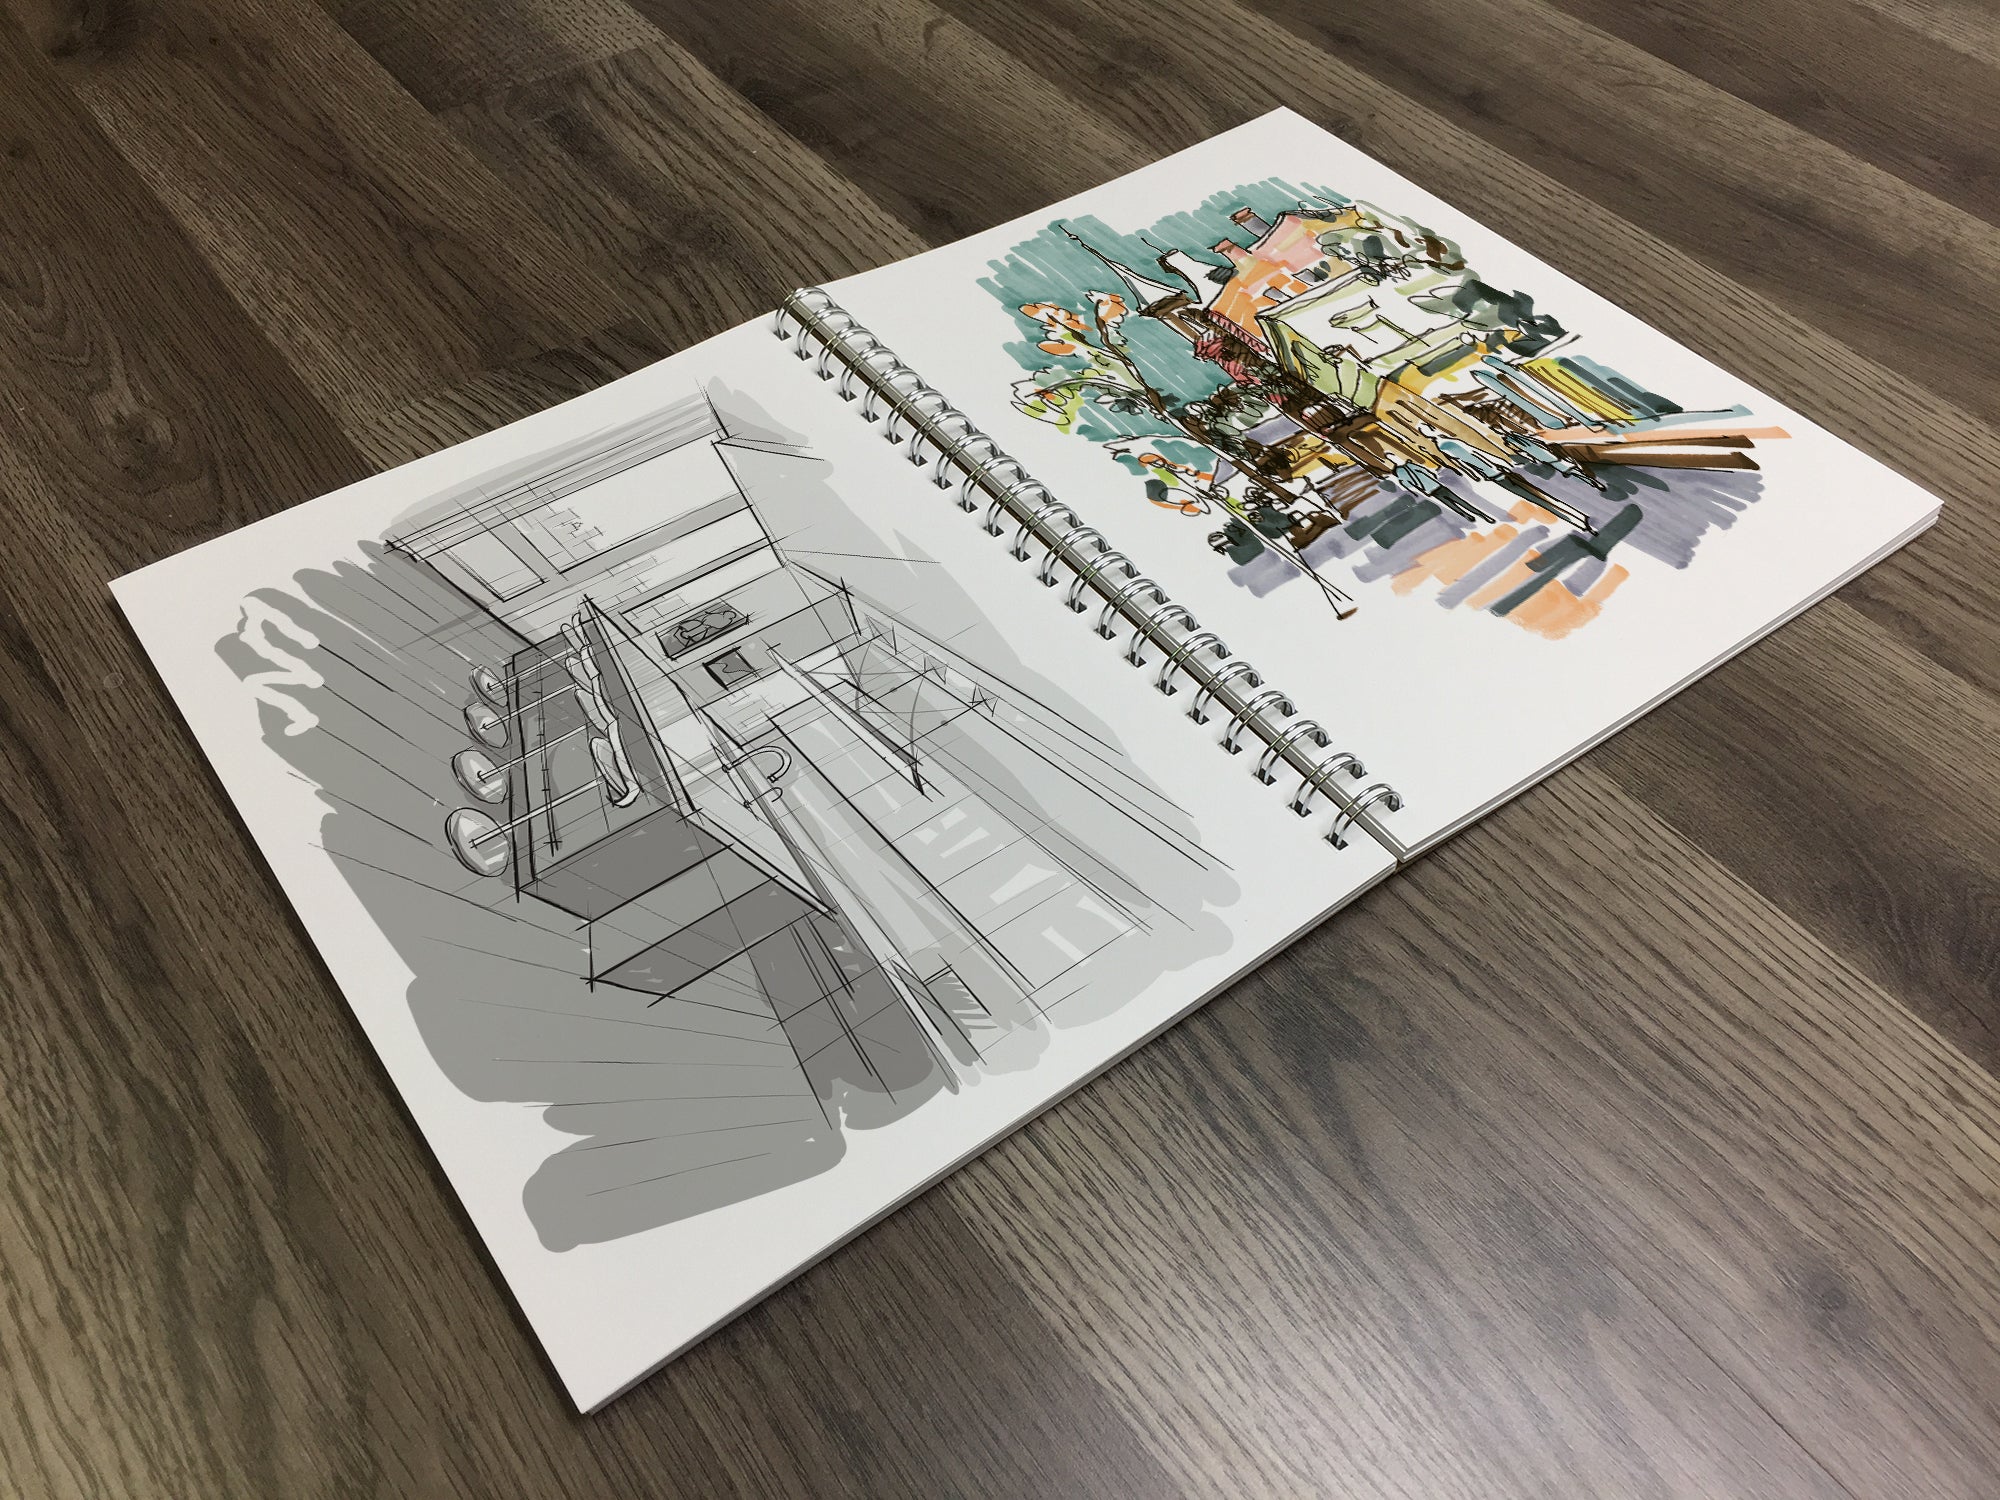 Interior Design Notebook: Designer's Sketchbook, 8. 5 X11 Moodboard, Designers Journal, 100 Pages for Drawing Concept Sketches, Client Organizer